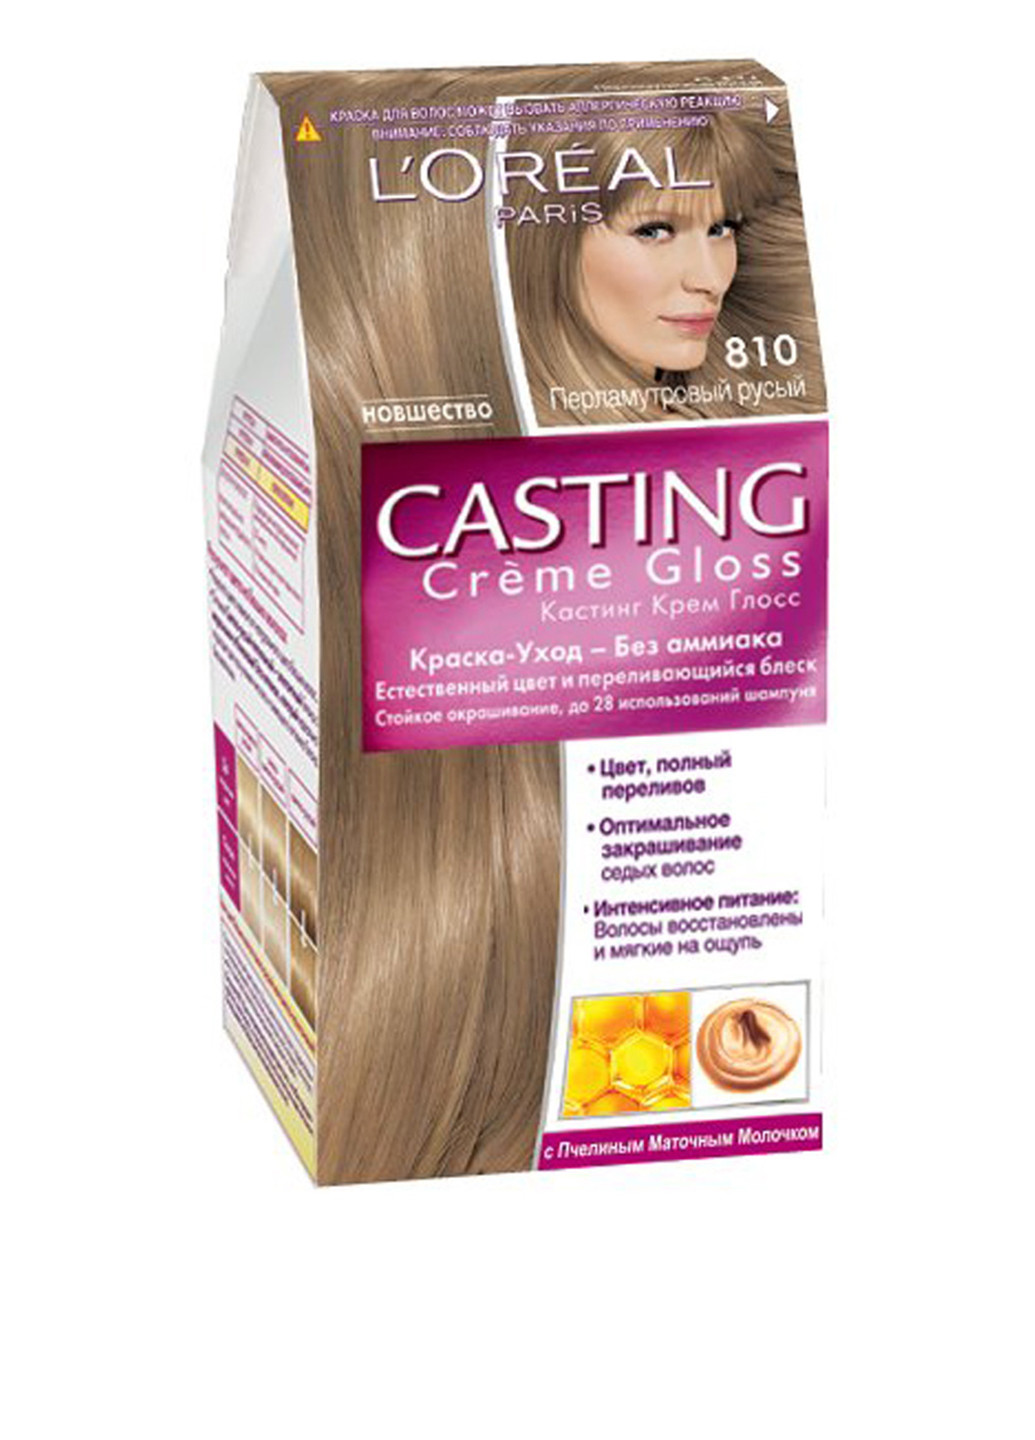 Краска для волос L'oreal Casting Creme Gloss 810 Перламутовый русый L'Oreal Paris (88094951)